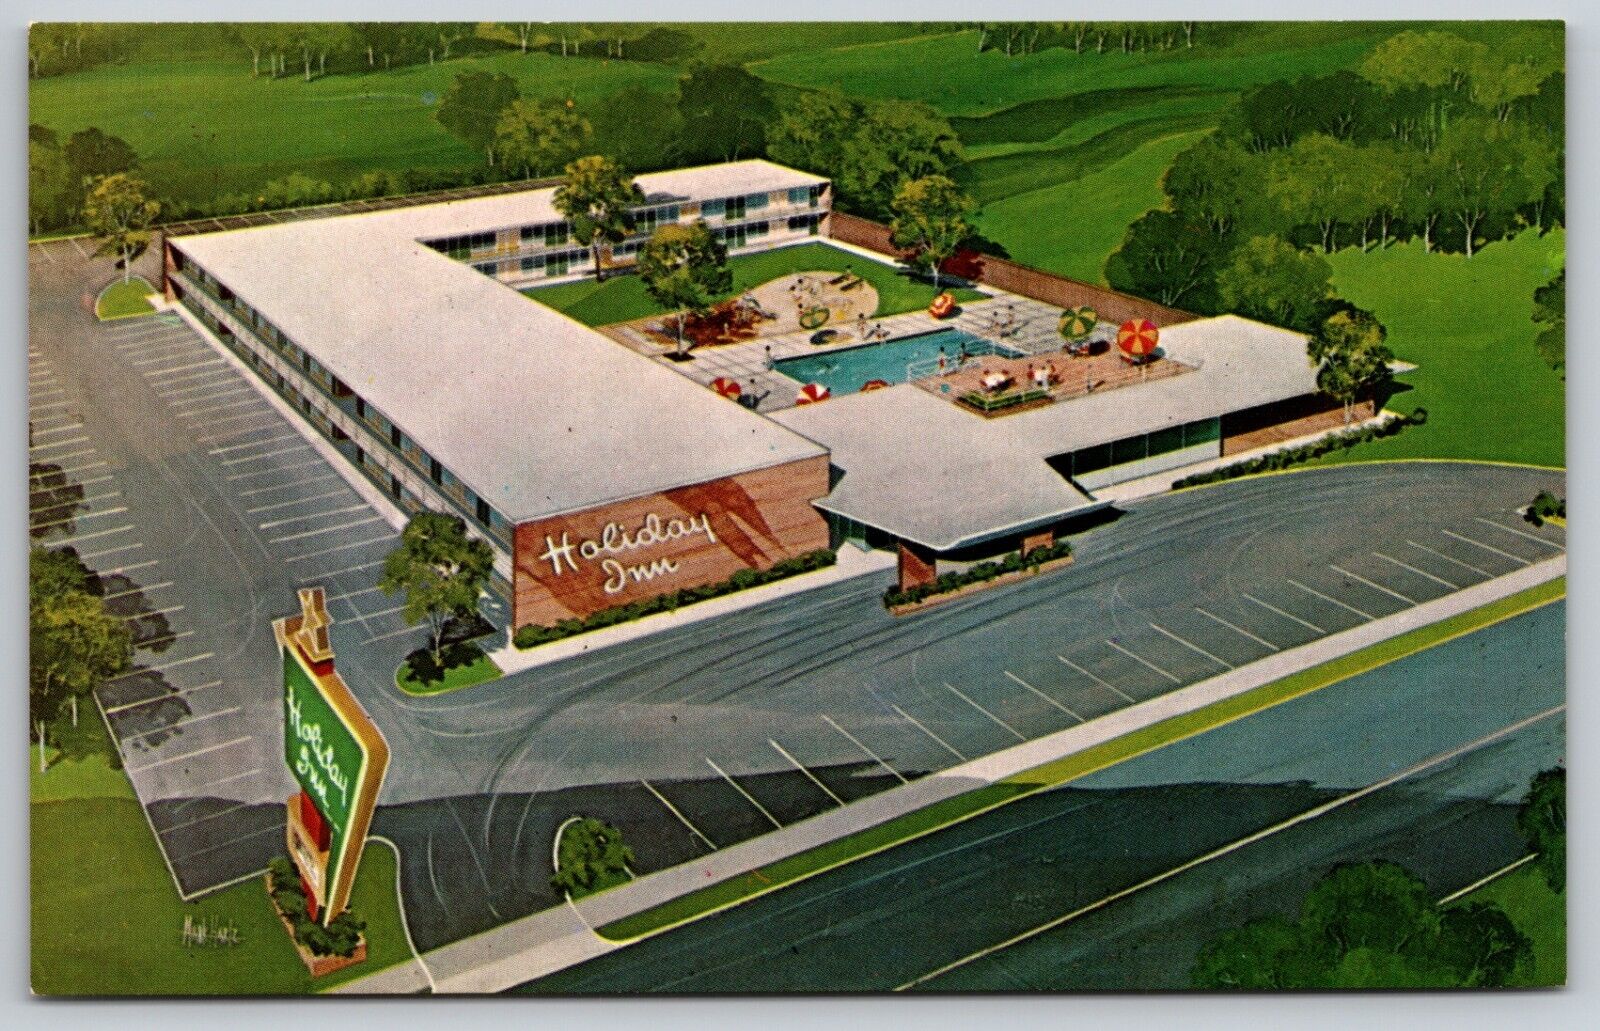 Holiday Inn Olney Illinois - Motel - Artist Concept - Aerial 1960 Postcard